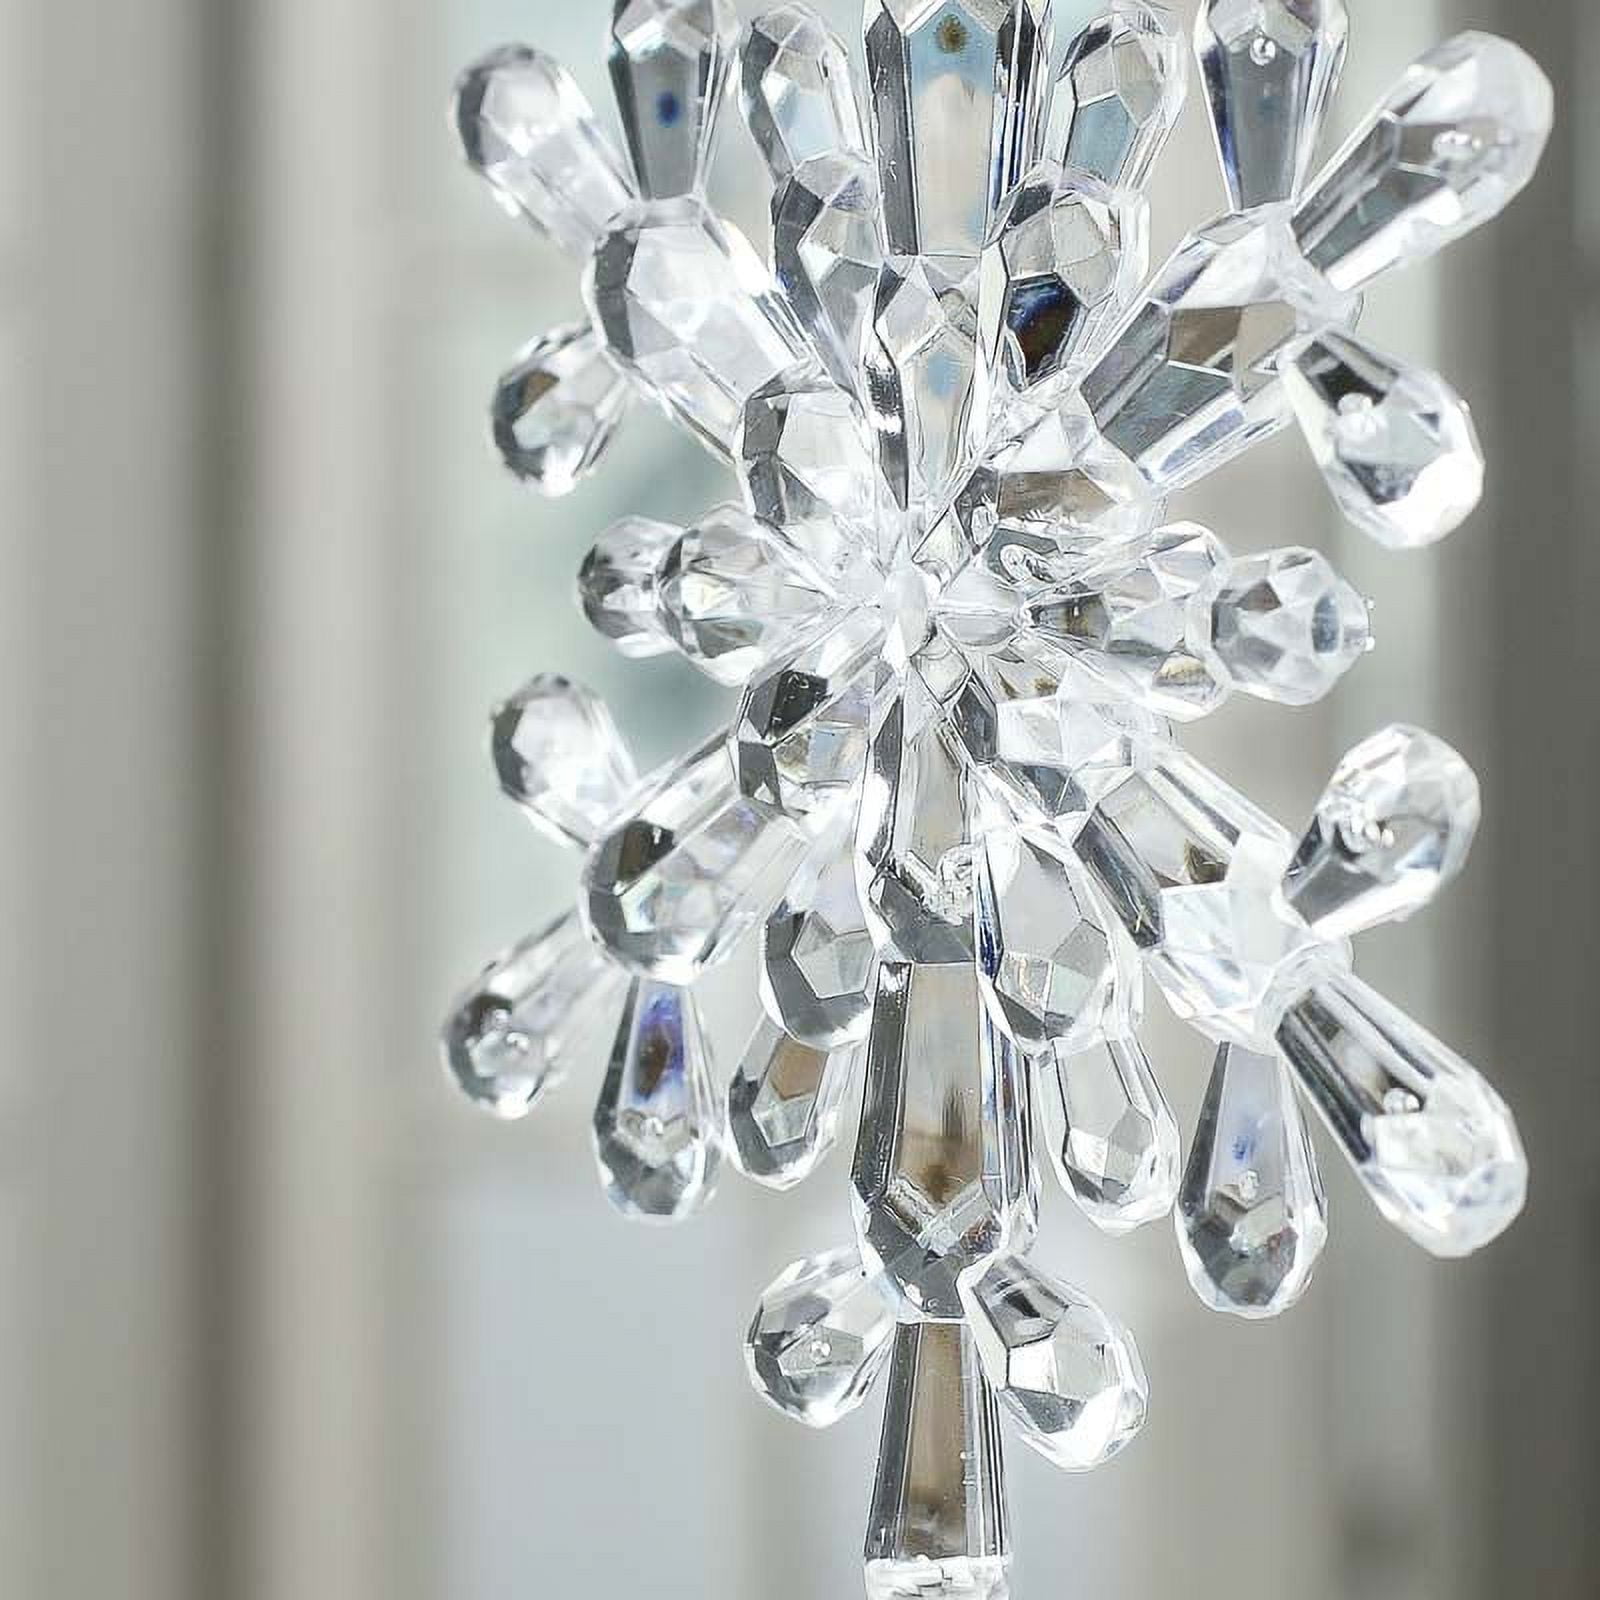 Kiewfjdk Christmas Acrylic Crystal Snowflakes Ornaments Christmas